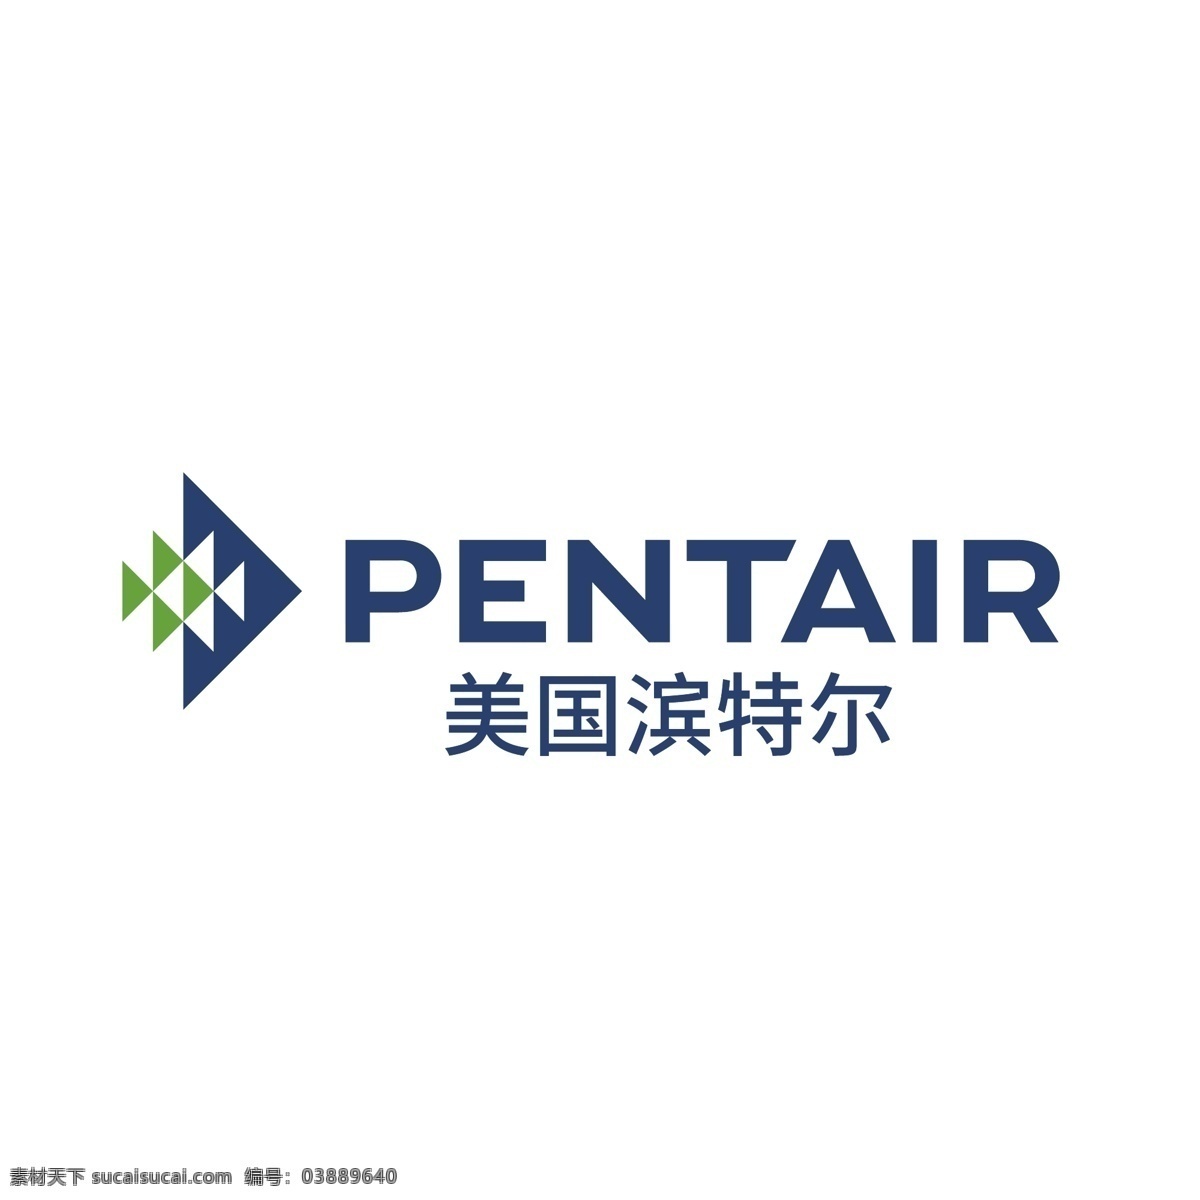 pentair 滨特尔 美国滨特尔 logo 标志 矢量 企业 标识 标志图标 logo设计 企业logo